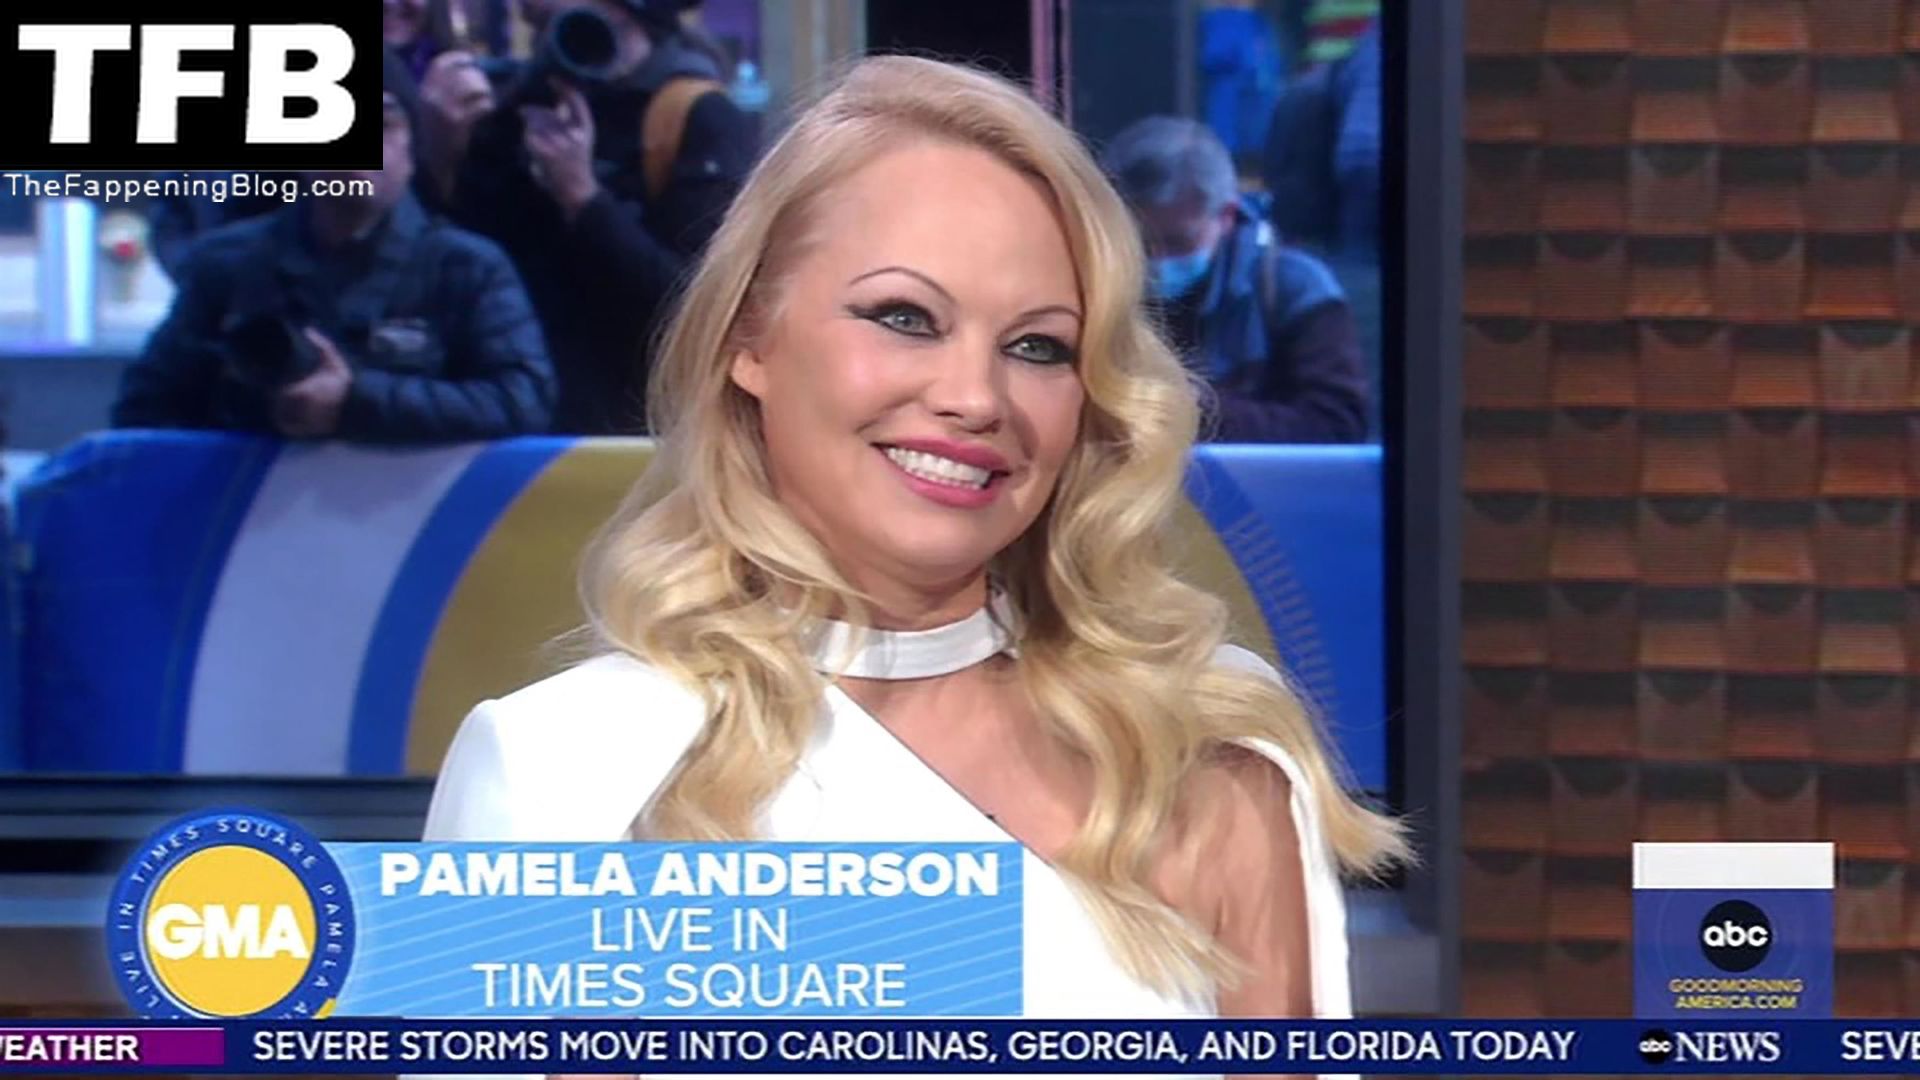 Pamela-Anderson-Hot-The-Fappening-Blog-6.jpg